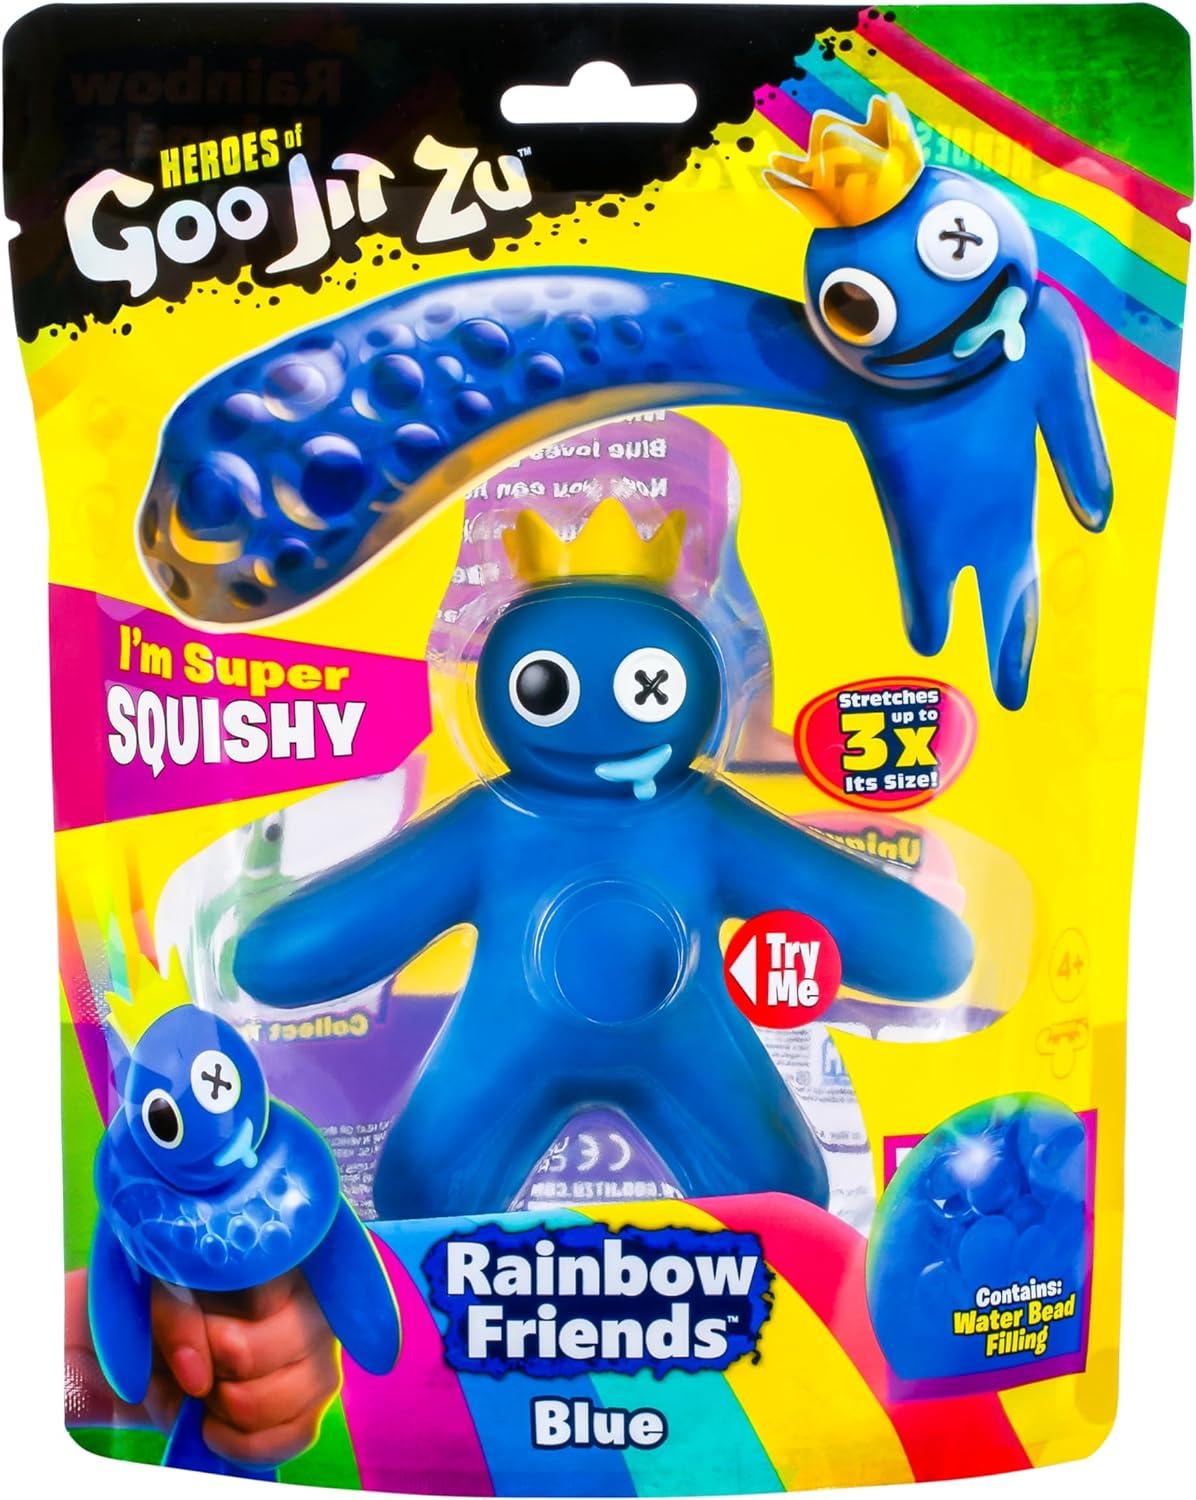 Heroes of Goo Jit Zu Rainbow Friends BLUE